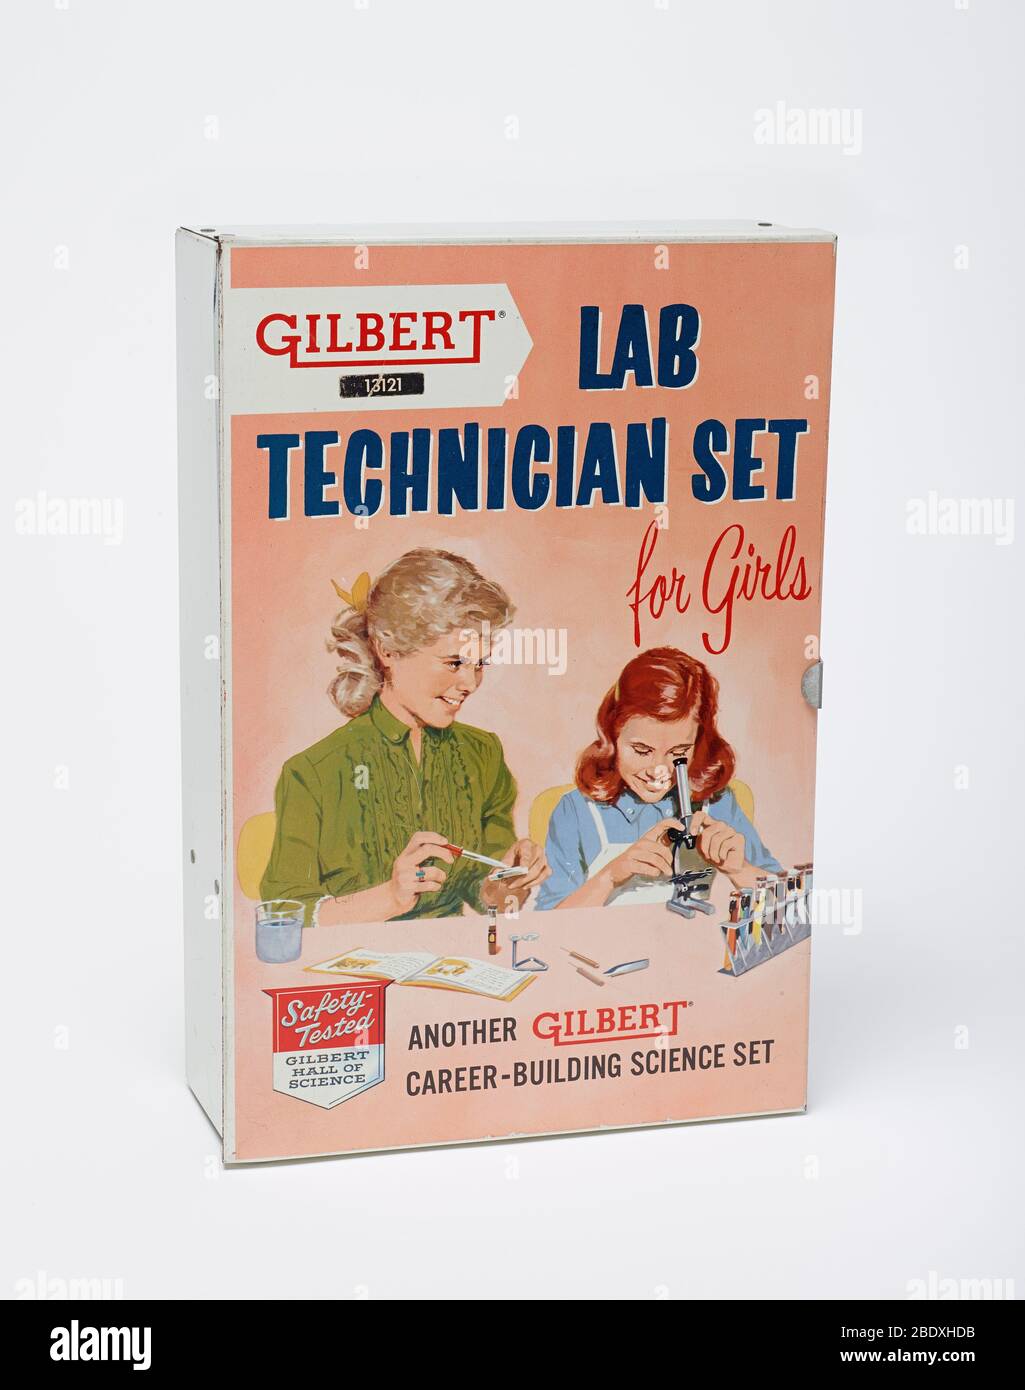 Gilbert Lab Technician Set for Girls, 1958 Stock Photo